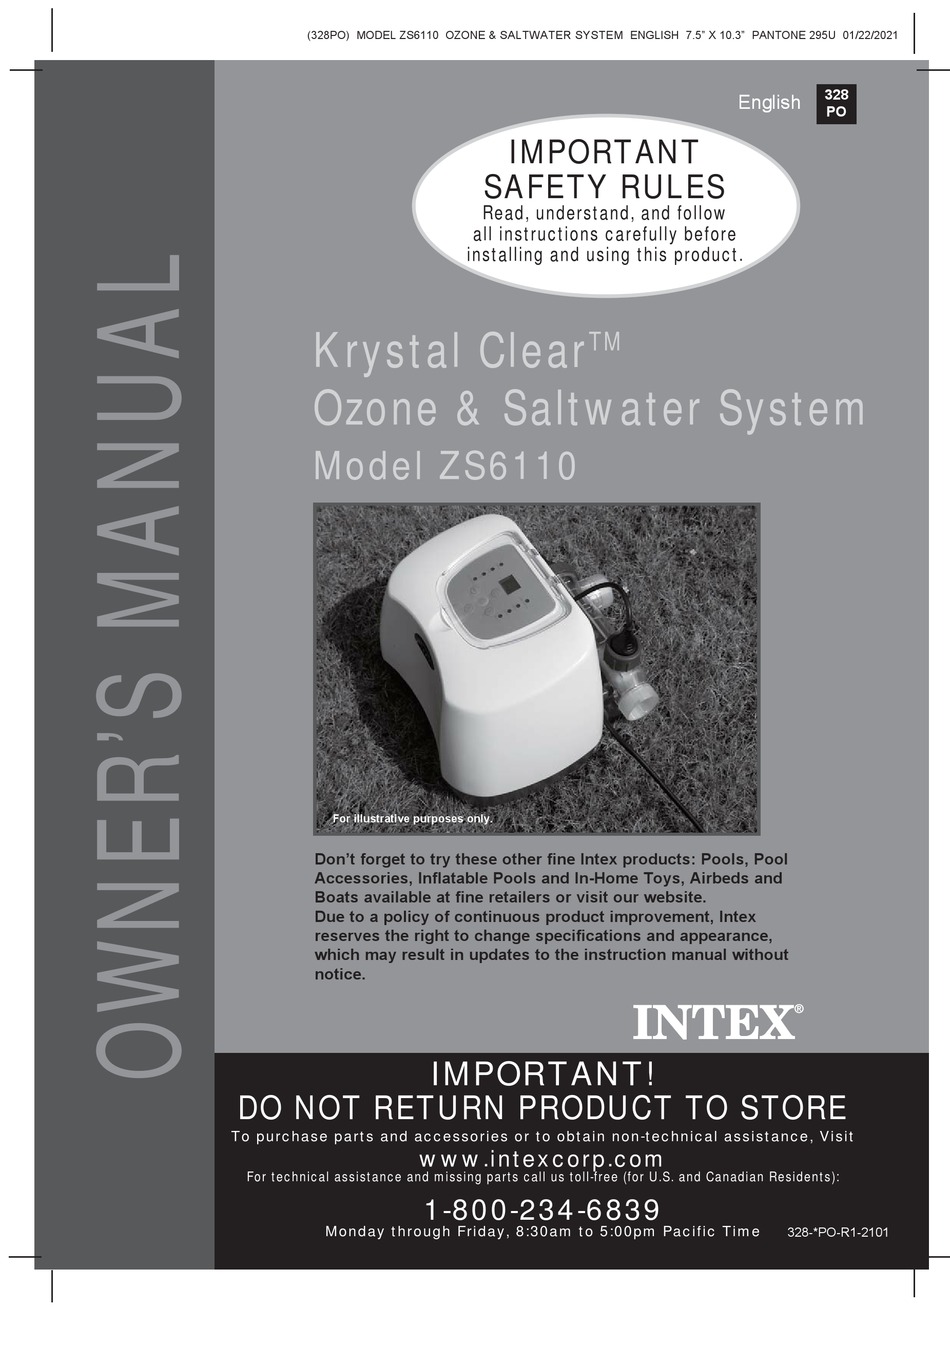 intex-krystal-clear-zs6110-owner-s-manual-pdf-download-manualslib